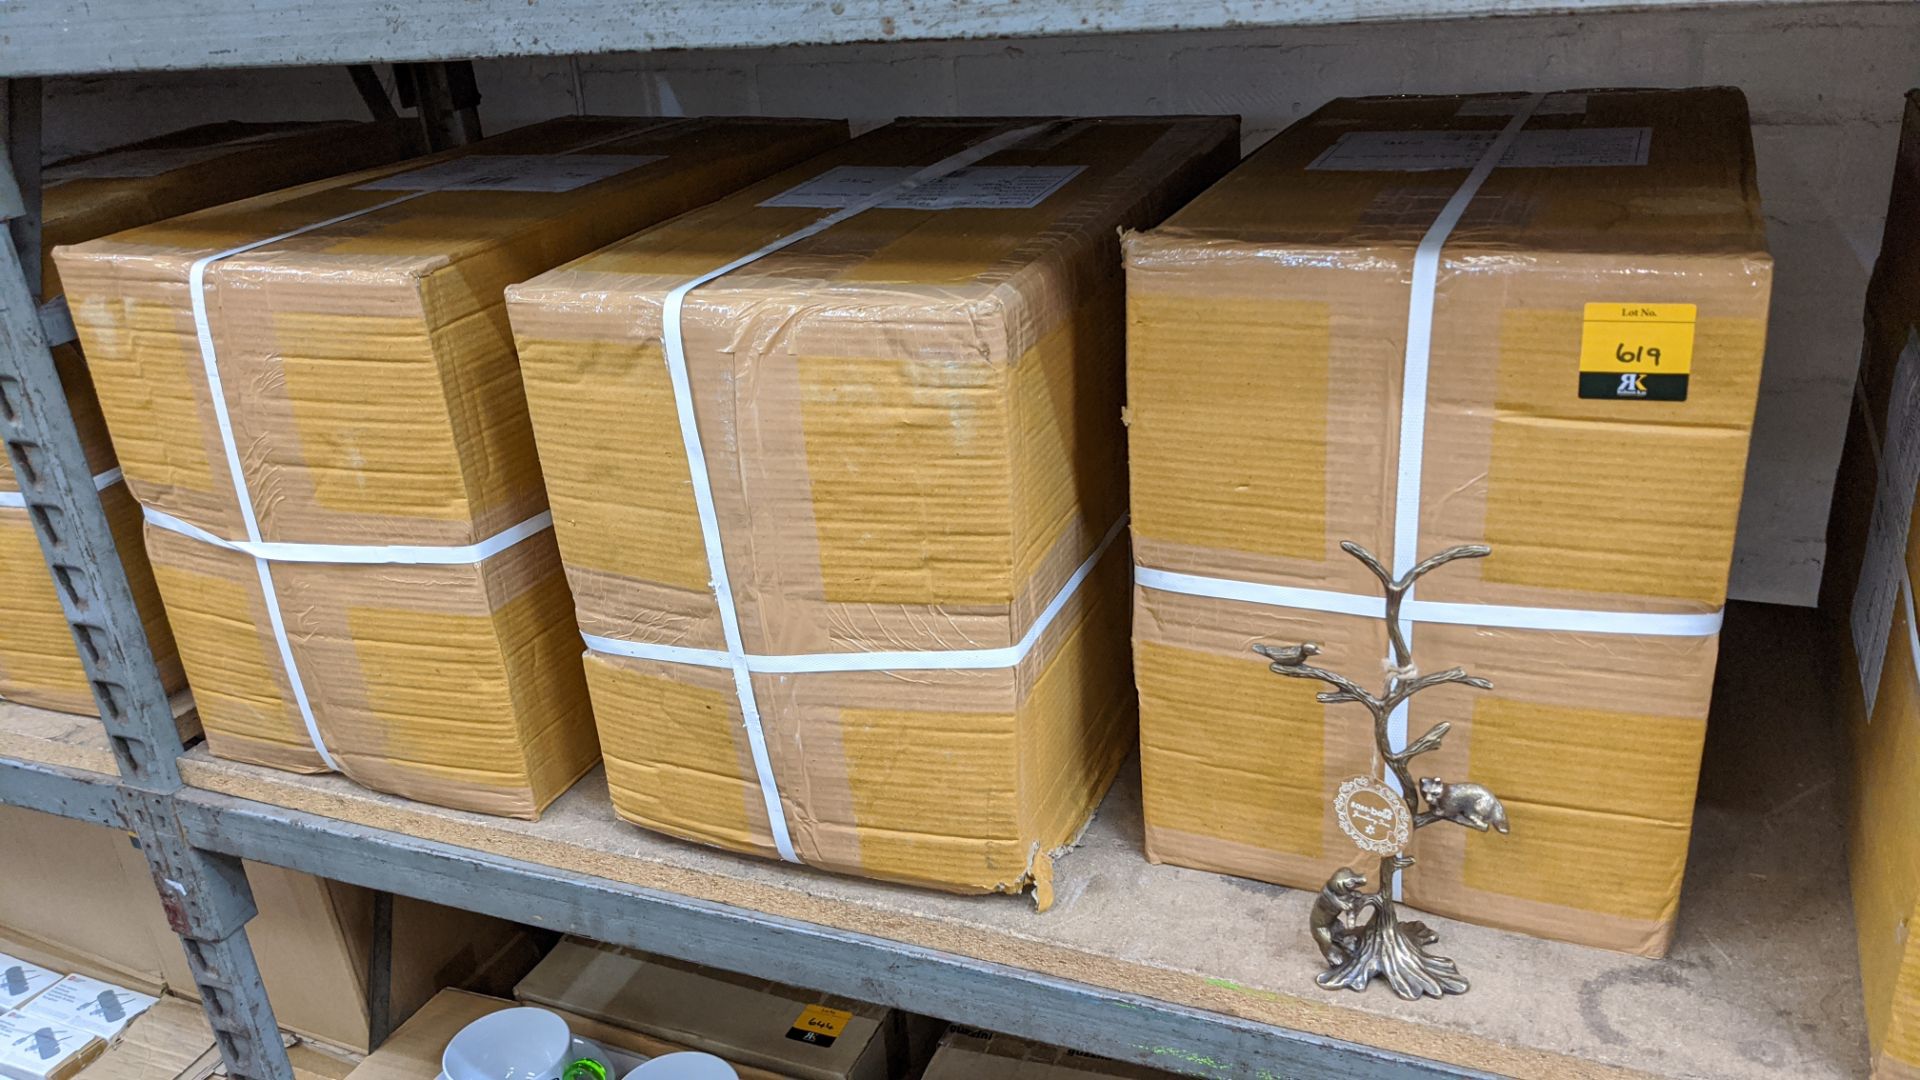 36 (3 cartons) off Autumn cat & dog jewellery trees, each circa 11" tall. Colour bronze